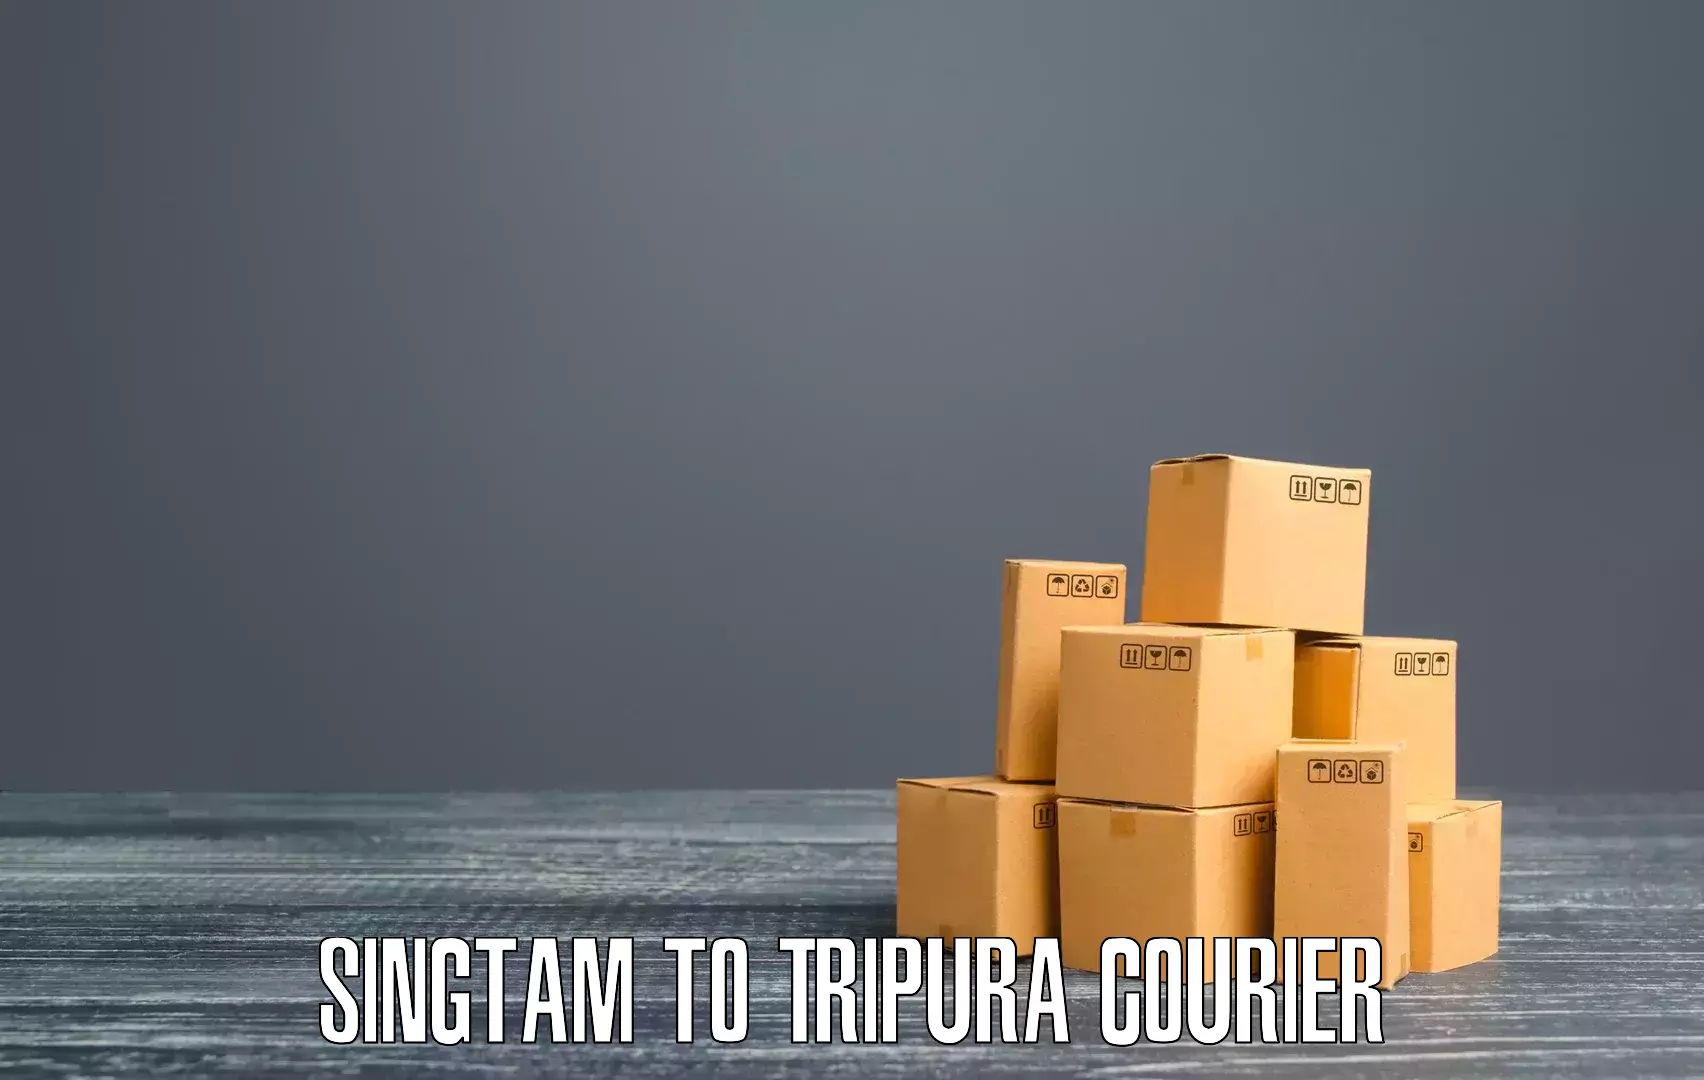 Logistics efficiency Singtam to Tripura